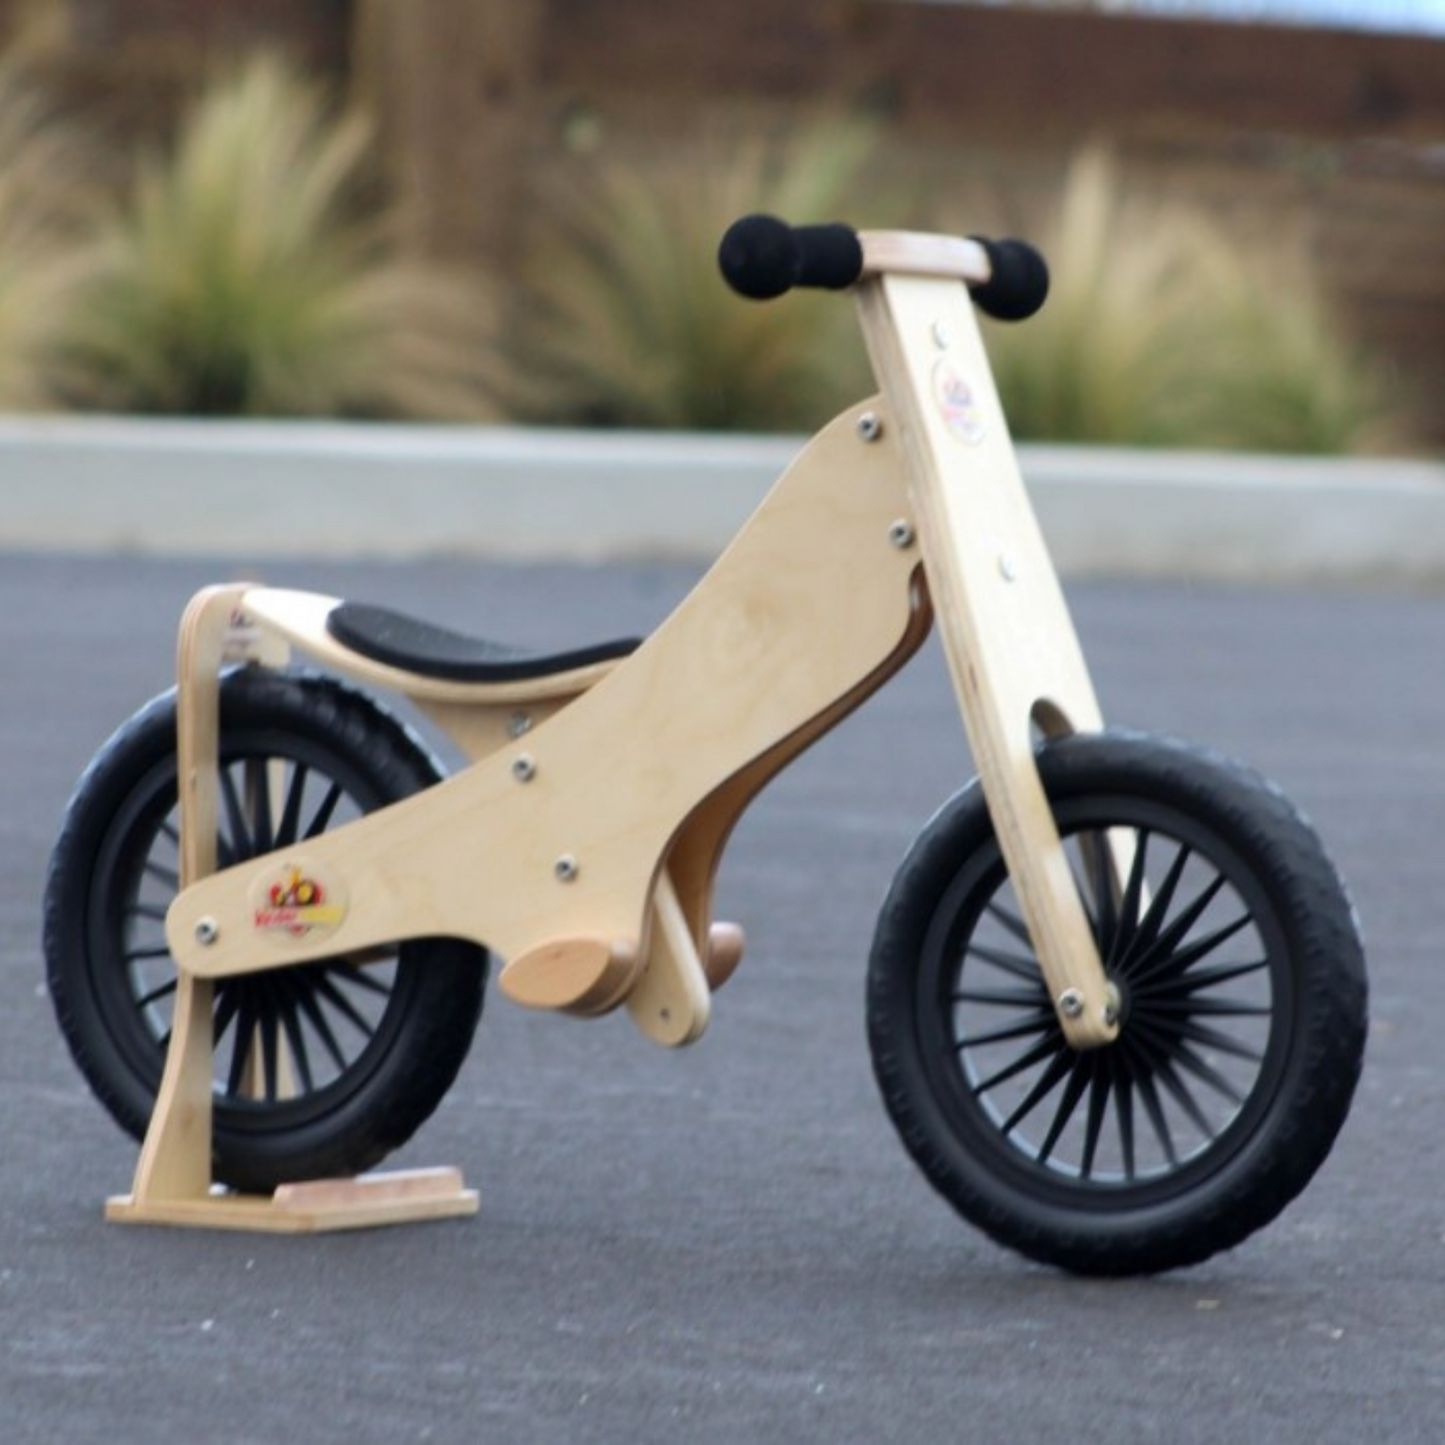 Kinderfeets wooden bike stand